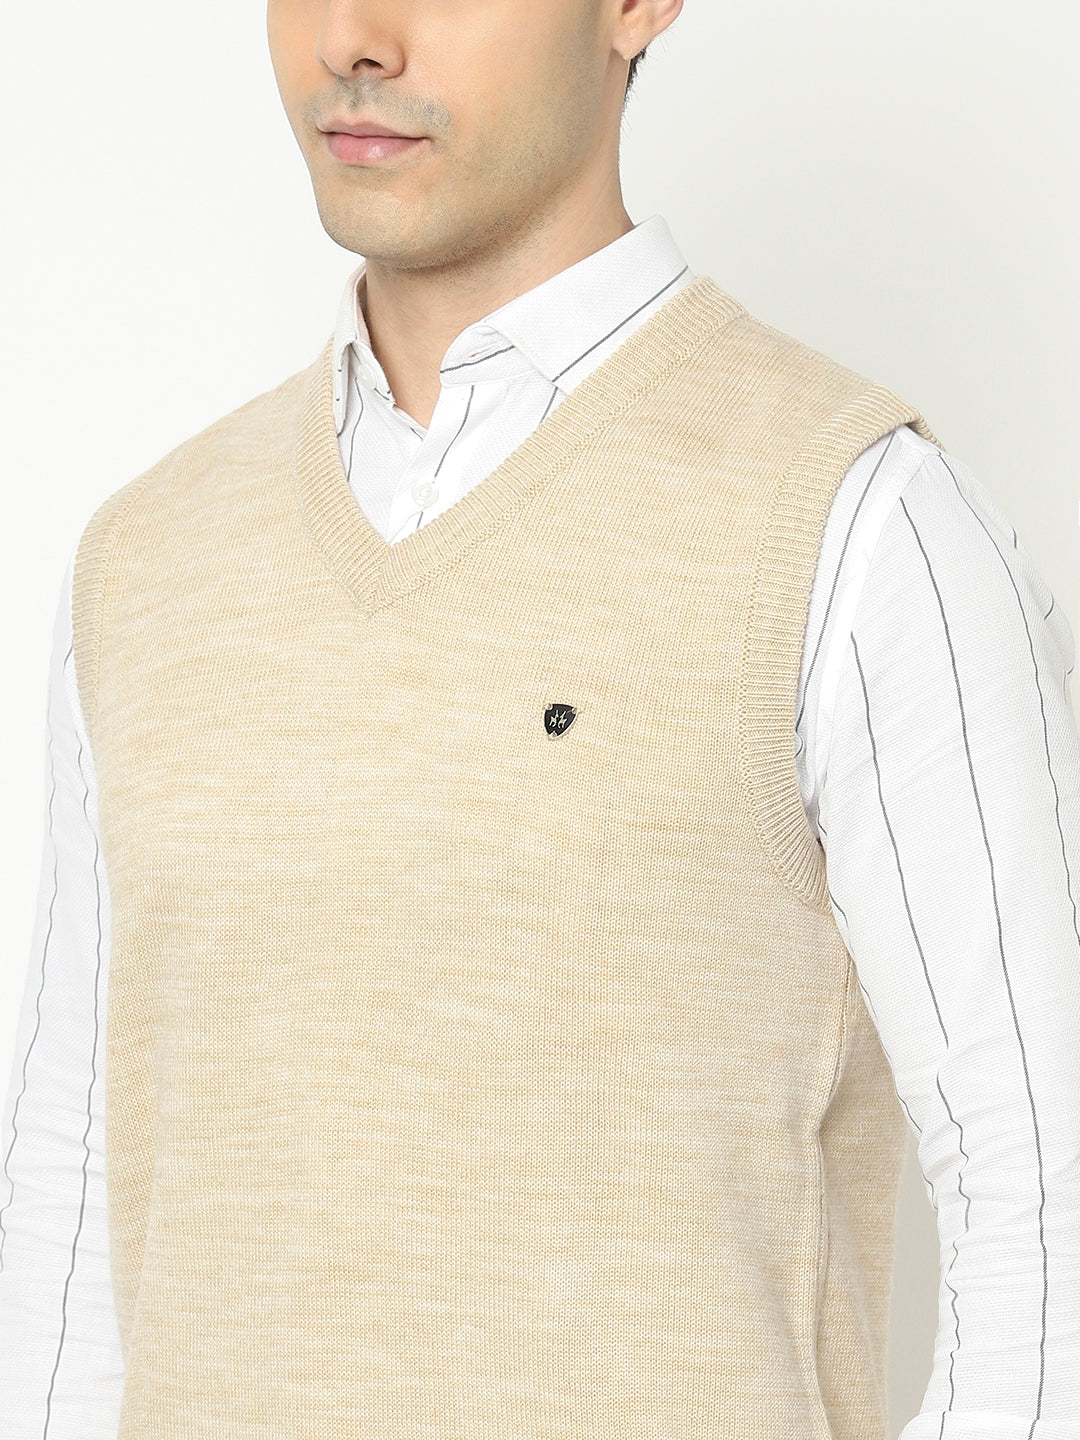  Beige Sweater Vest with Logo Crest 